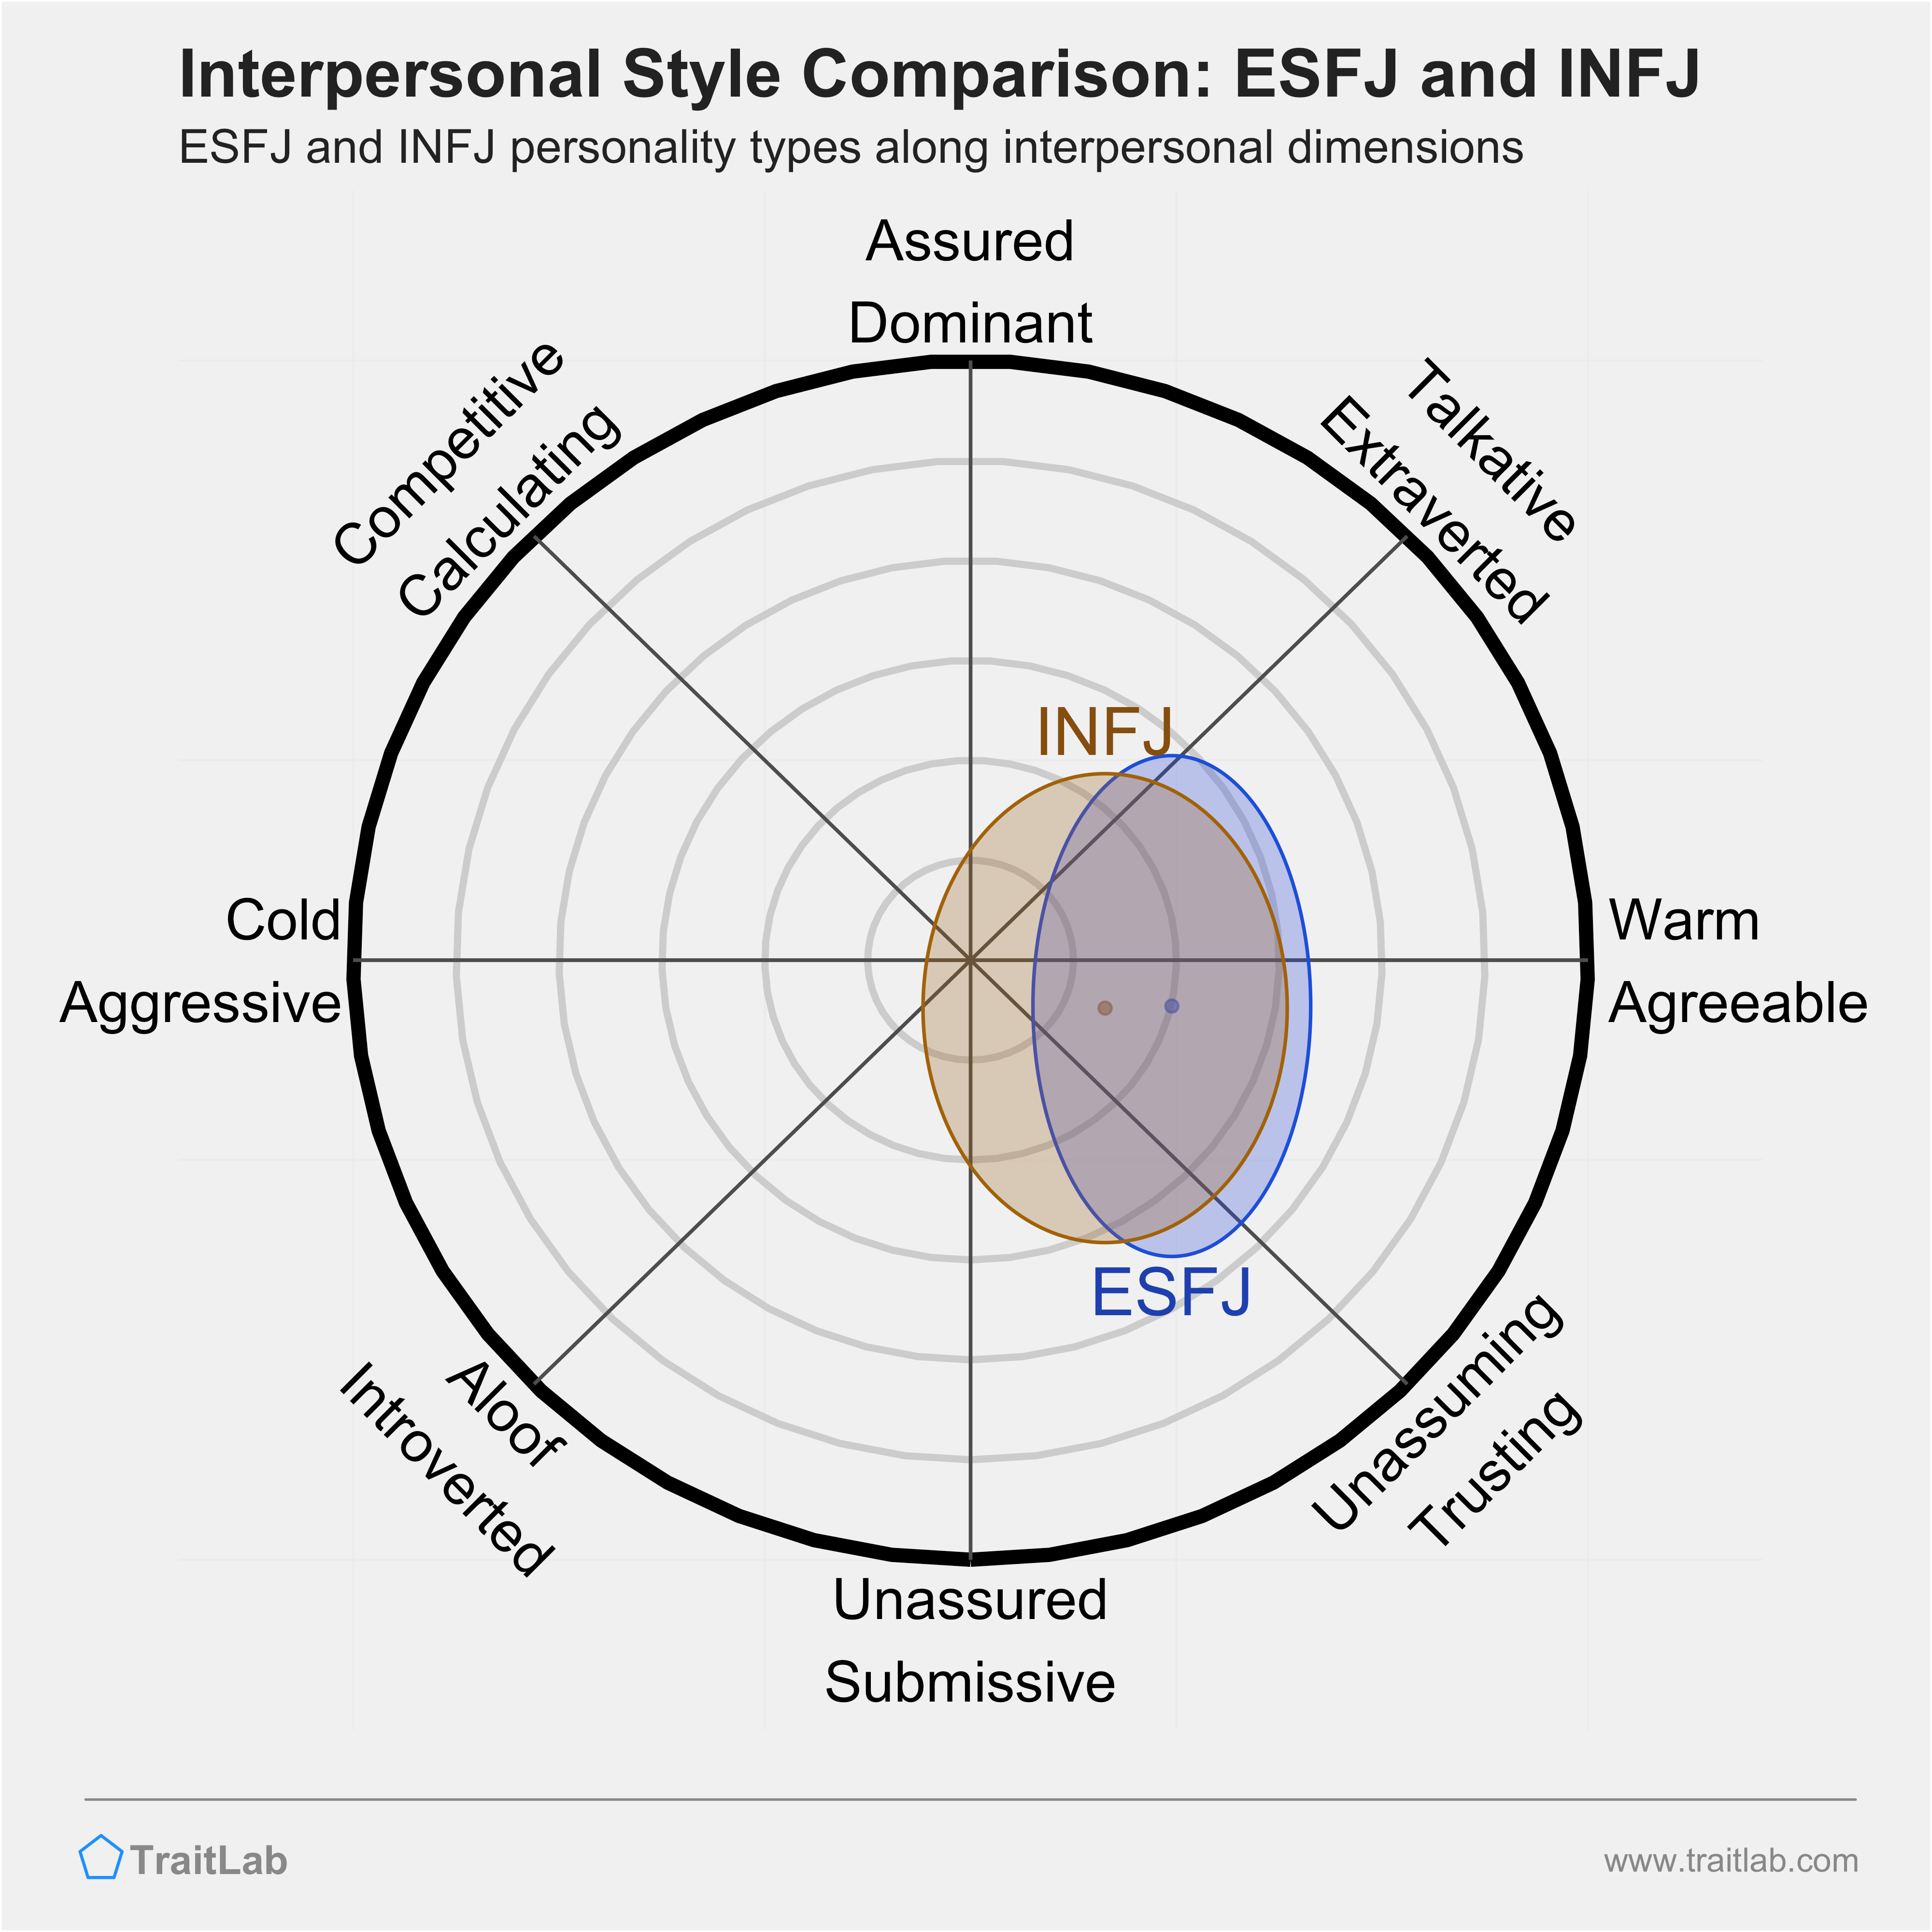 ESFJ and INFJ comparison across interpersonal dimensions